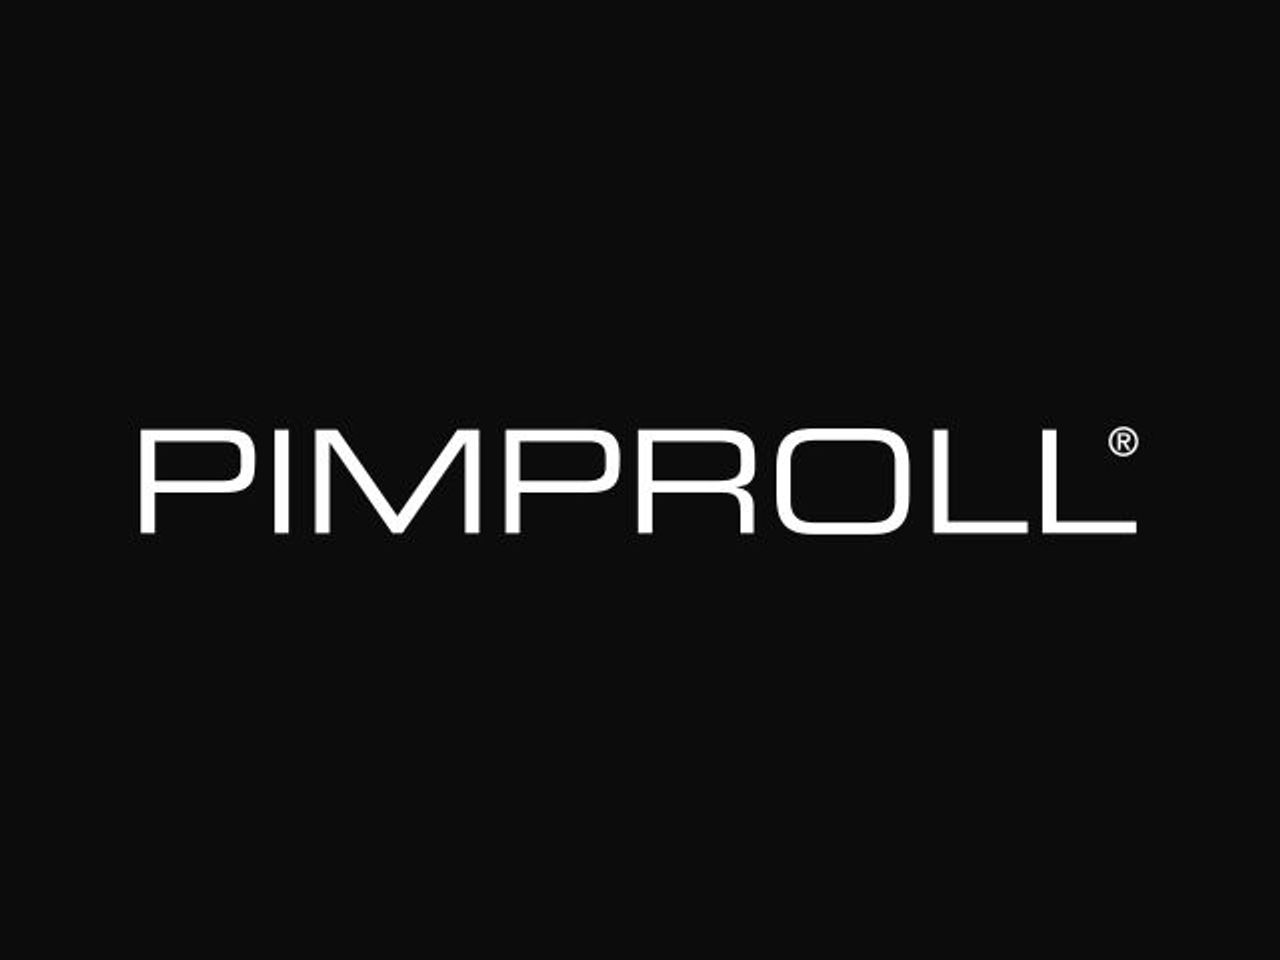 PimpRoll Explores Infantilism Taboo With DiaperLovingMommies.com